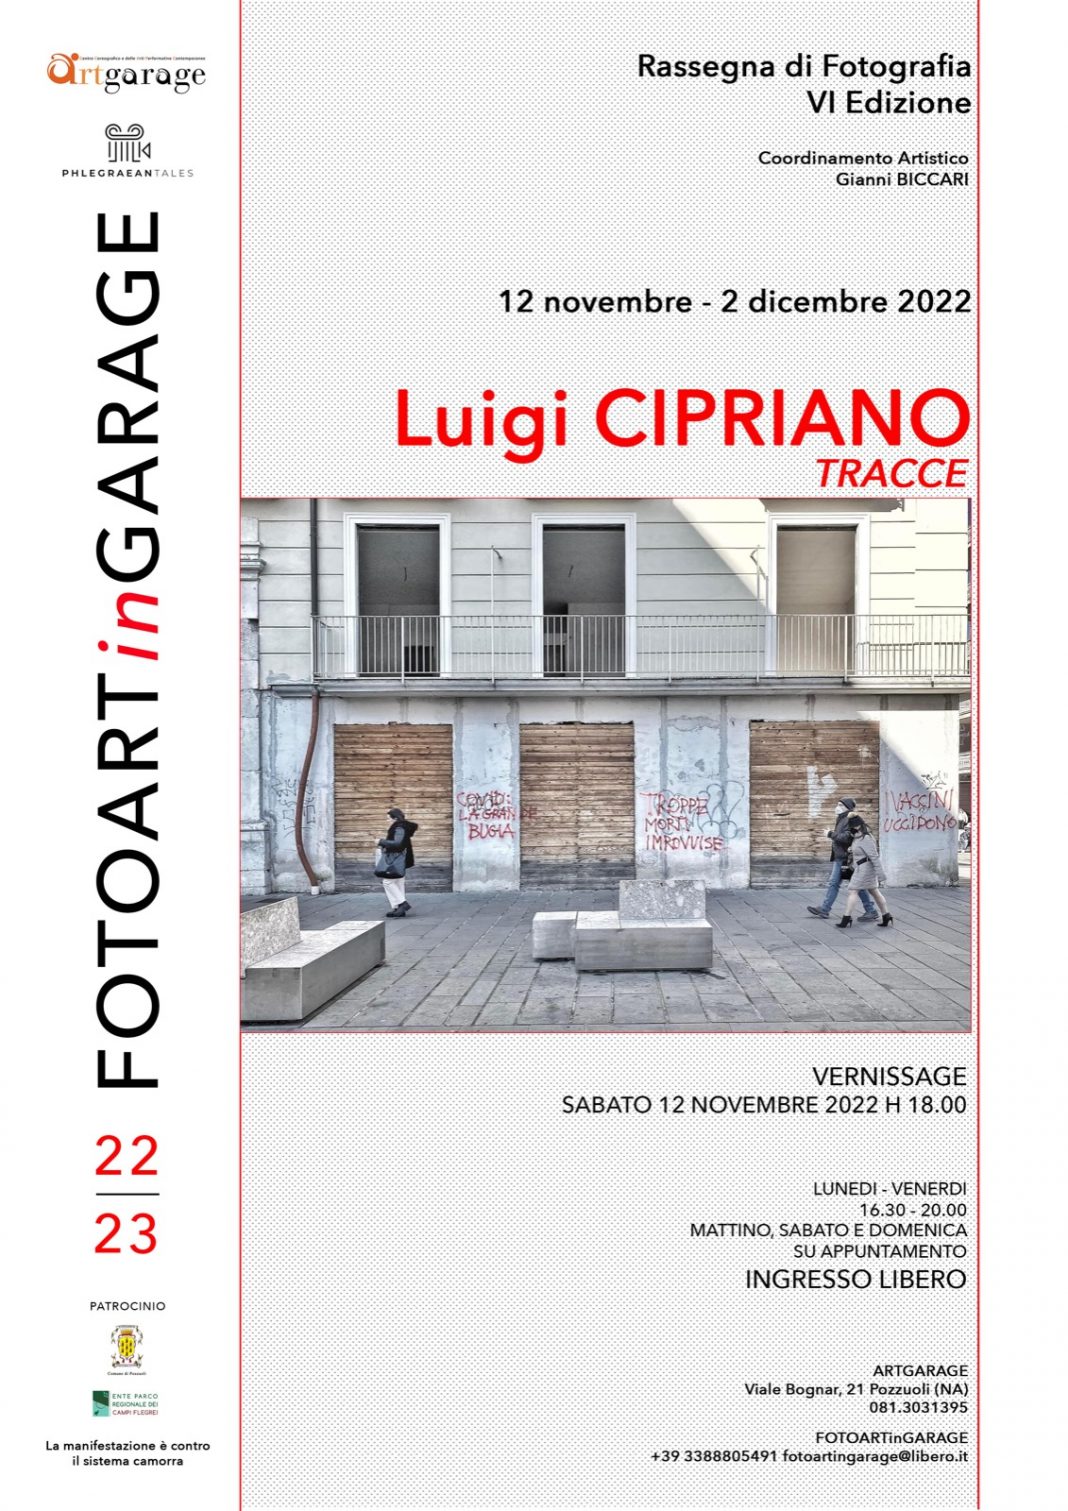 Luigi Cipriano – Traccehttps://www.exibart.com/repository/media/formidable/11/img/810/Locandina-1068x1511.jpeg